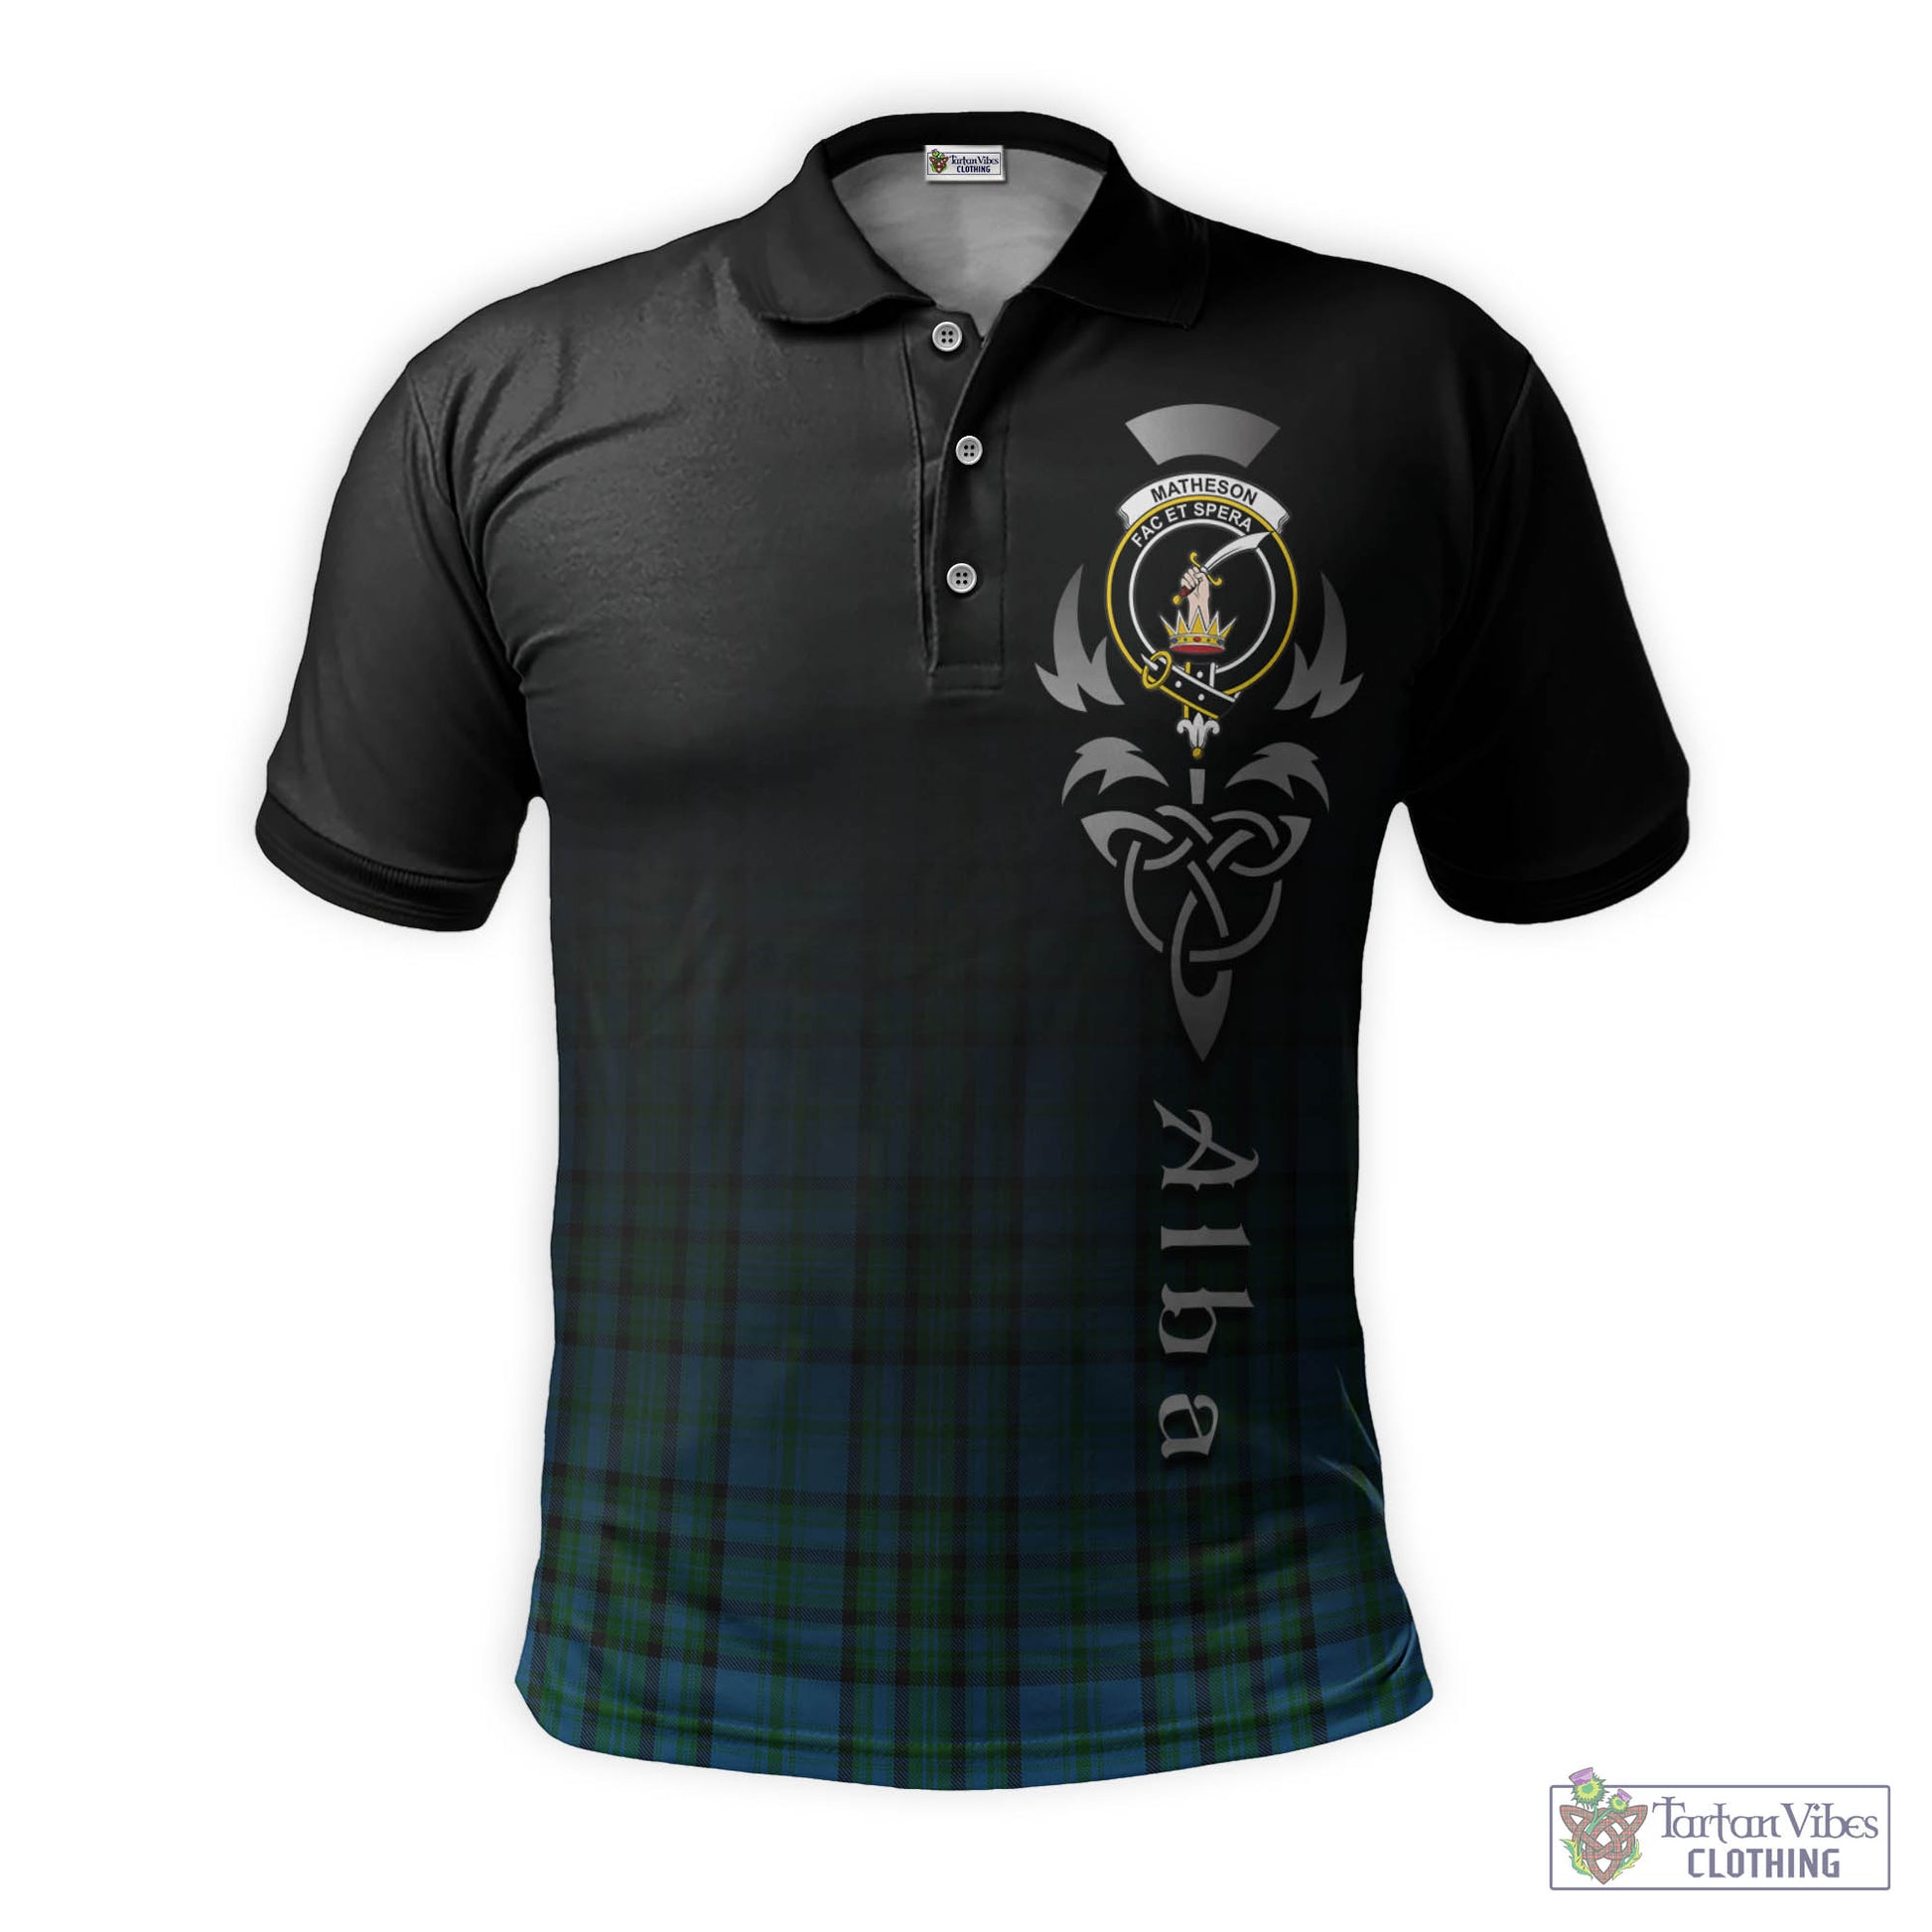 Tartan Vibes Clothing Matheson Hunting Tartan Polo Shirt Featuring Alba Gu Brath Family Crest Celtic Inspired